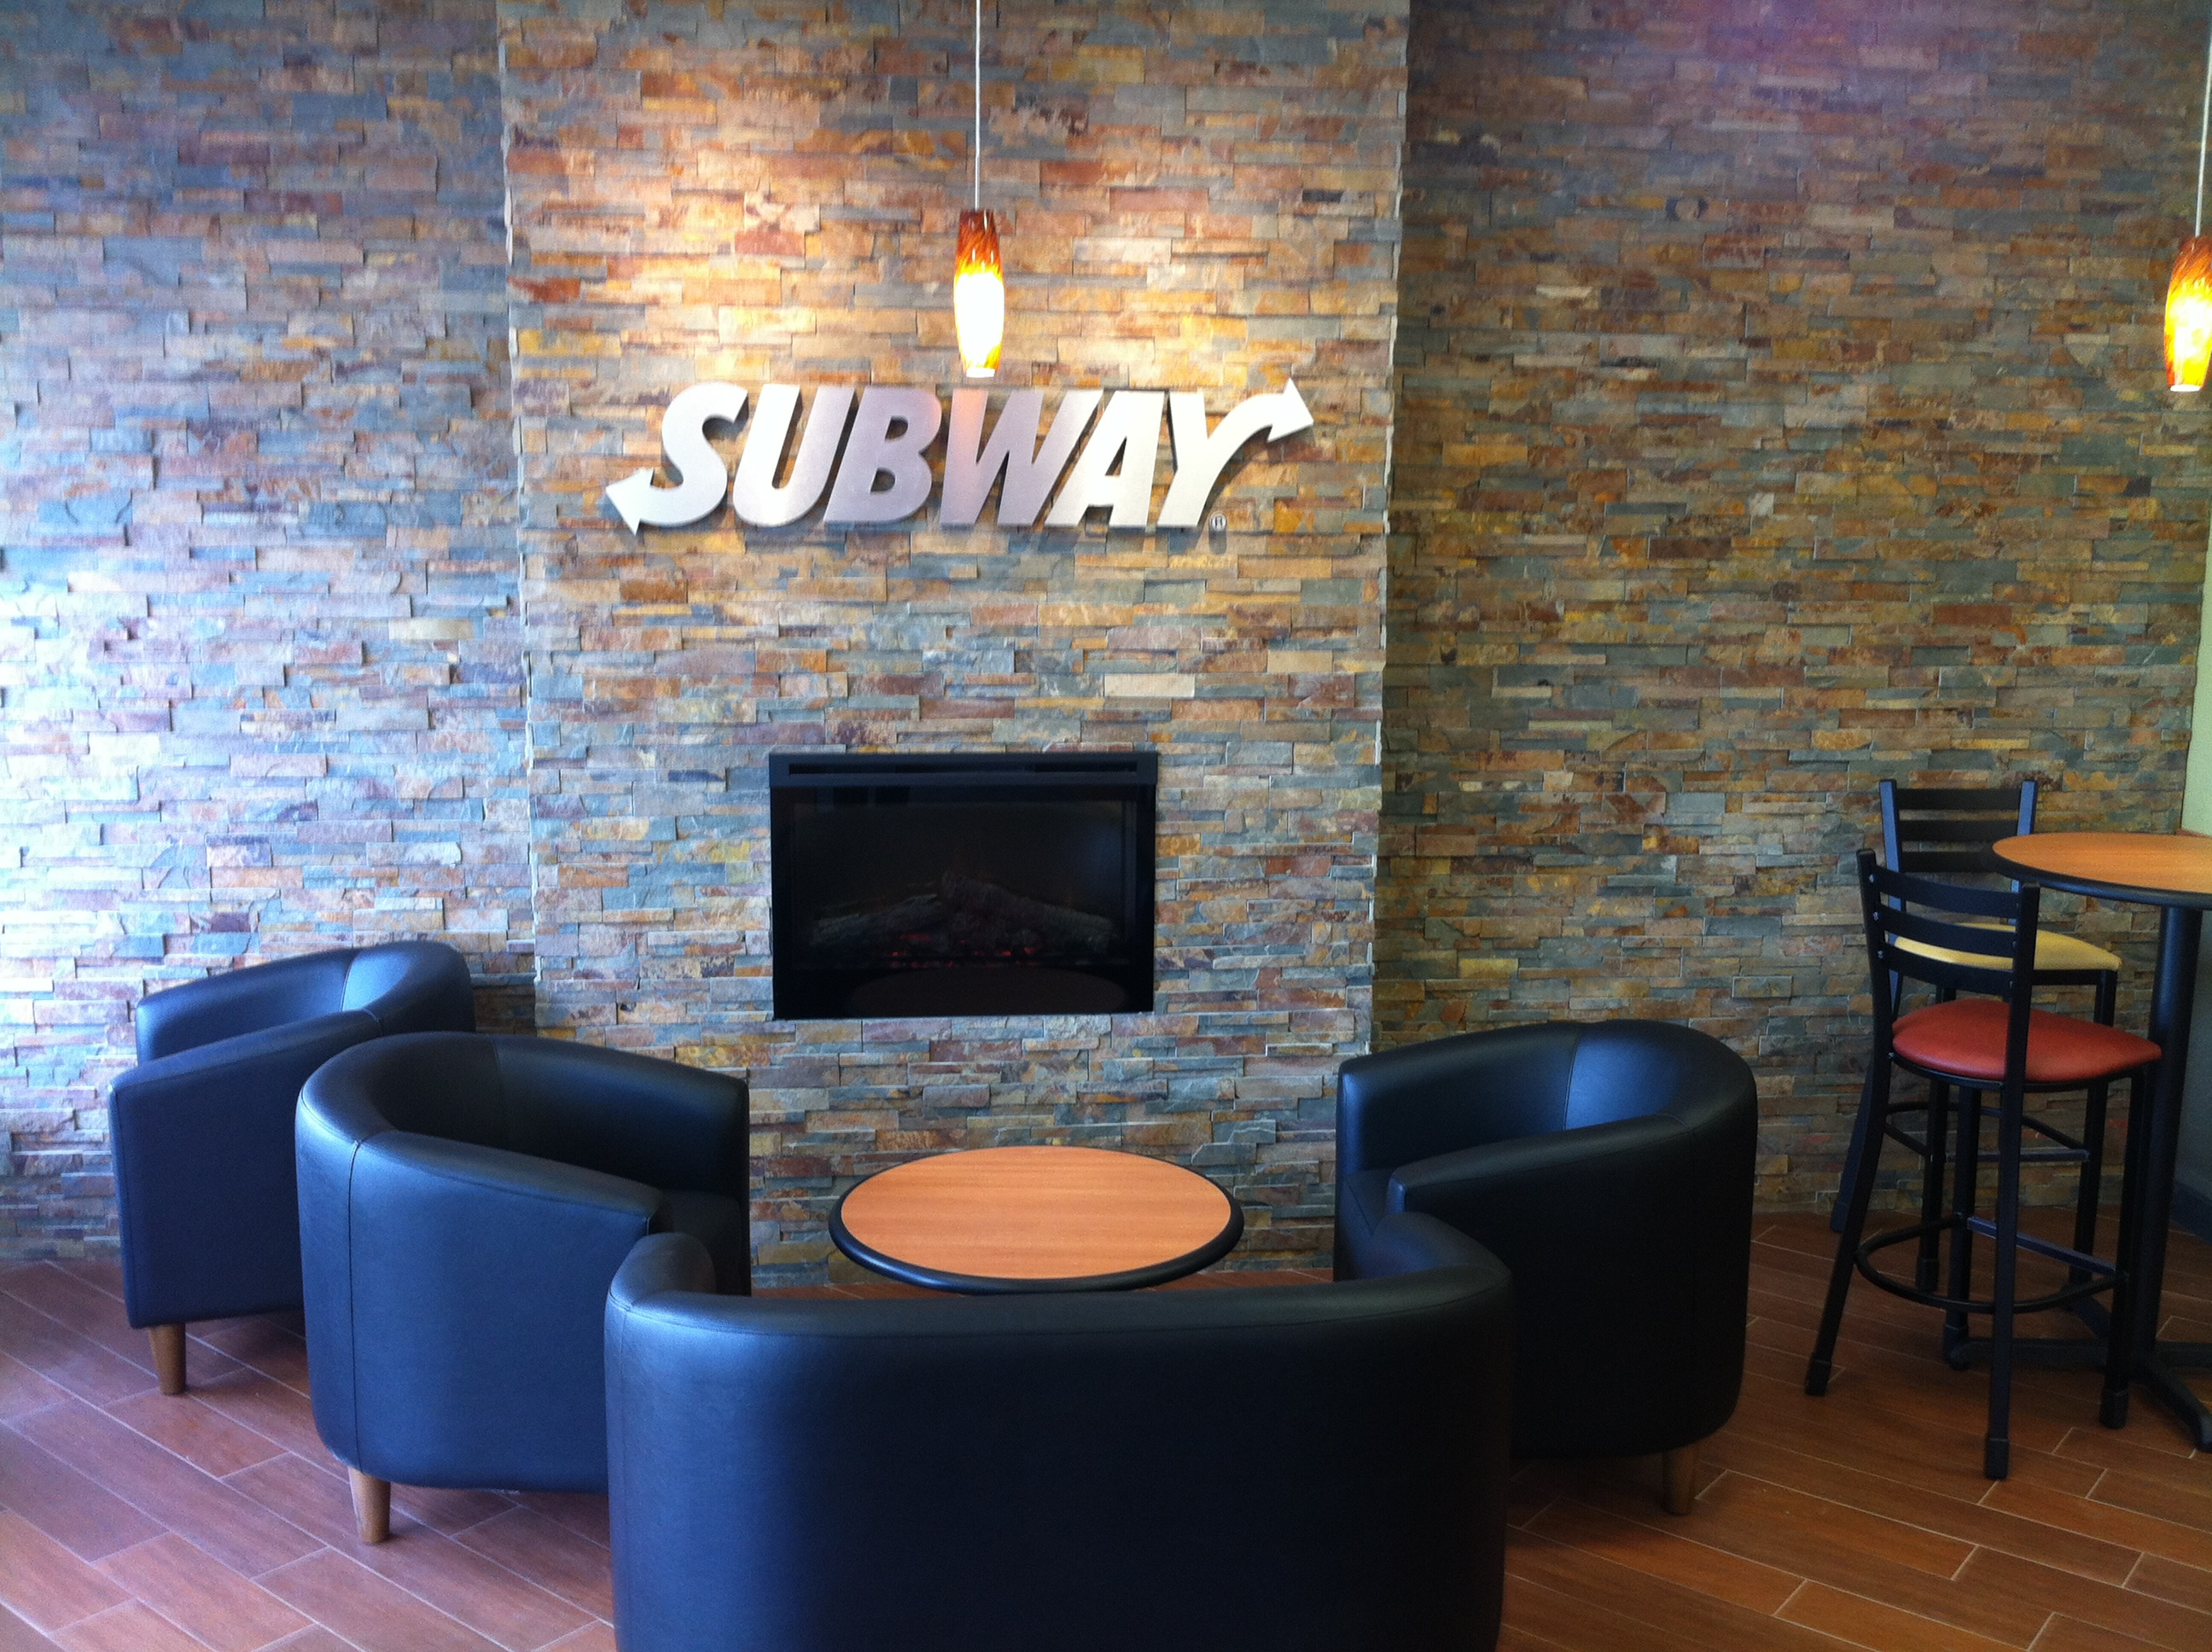 Sitting area at new Subway restaurant